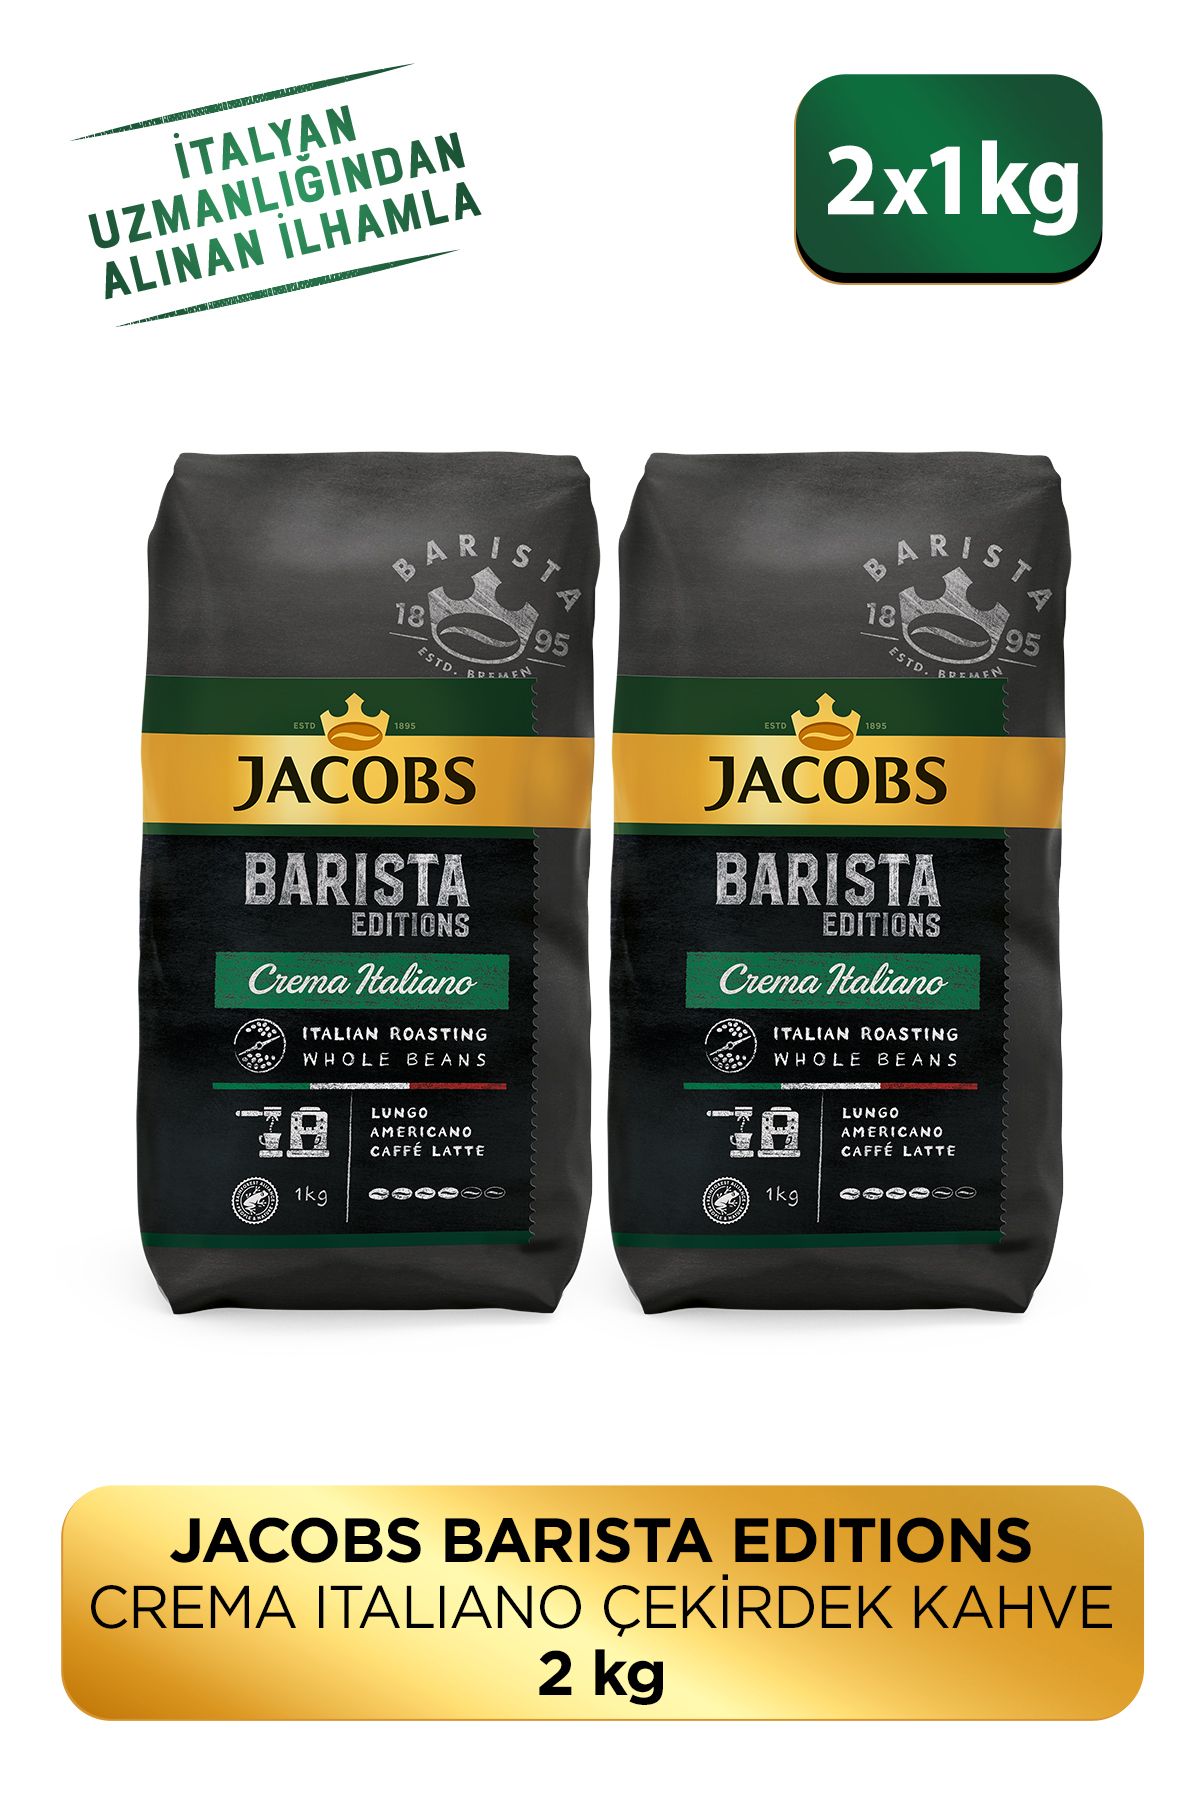 Jacobs Barista Editions Çekirdek Kahve Crema Italiano 1kg X 2 Paket